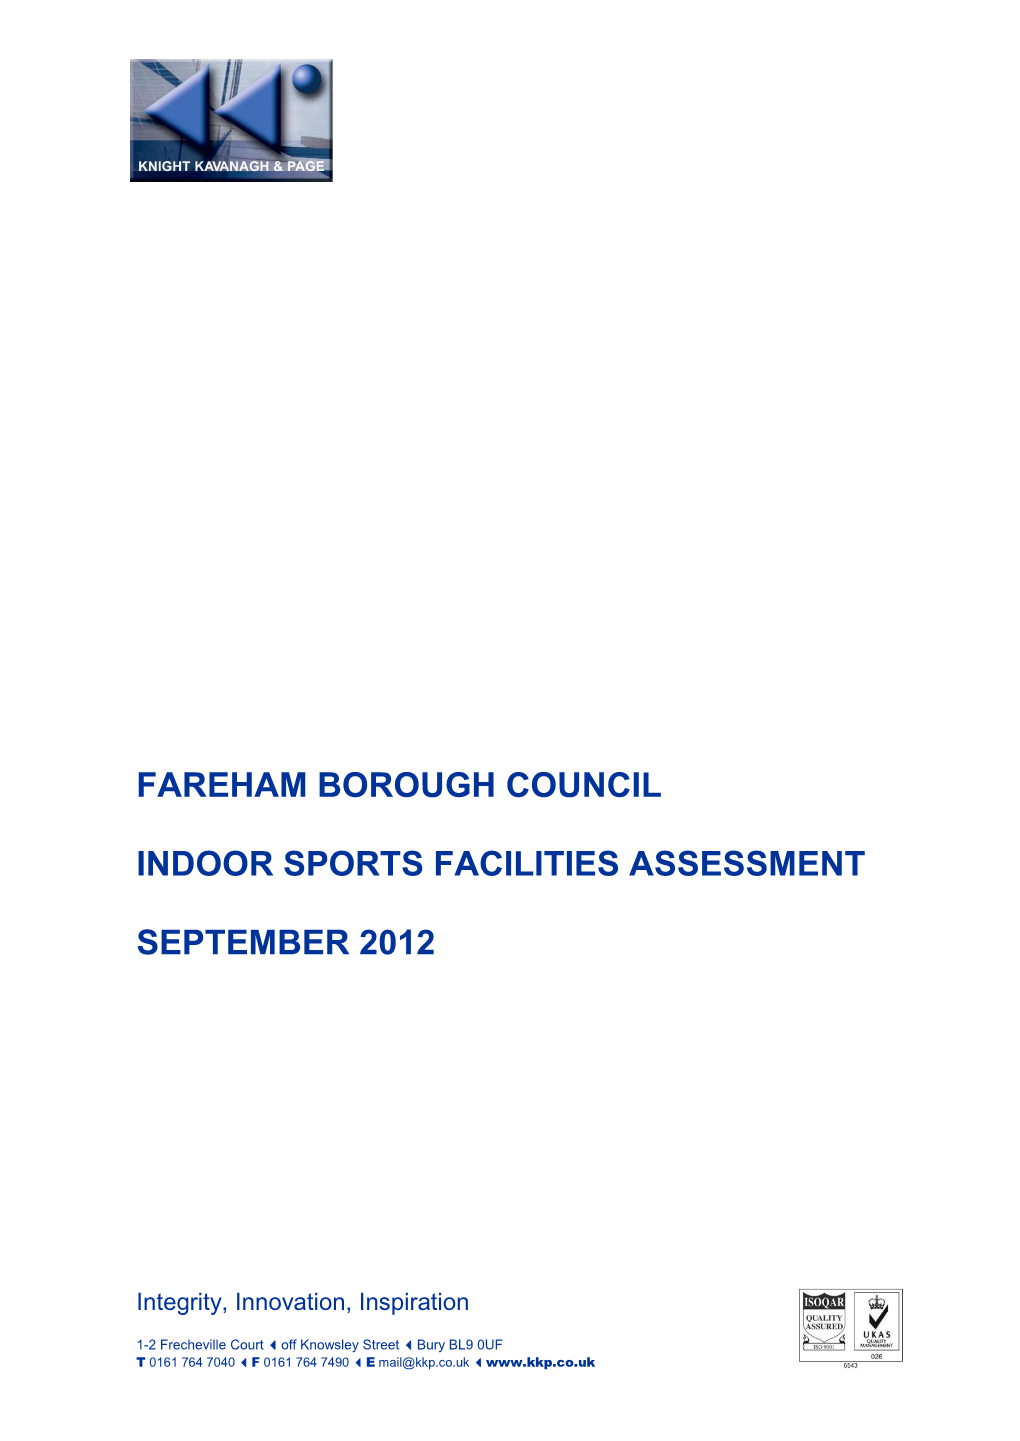 Fareham Indoor Sports Facilities Assessment